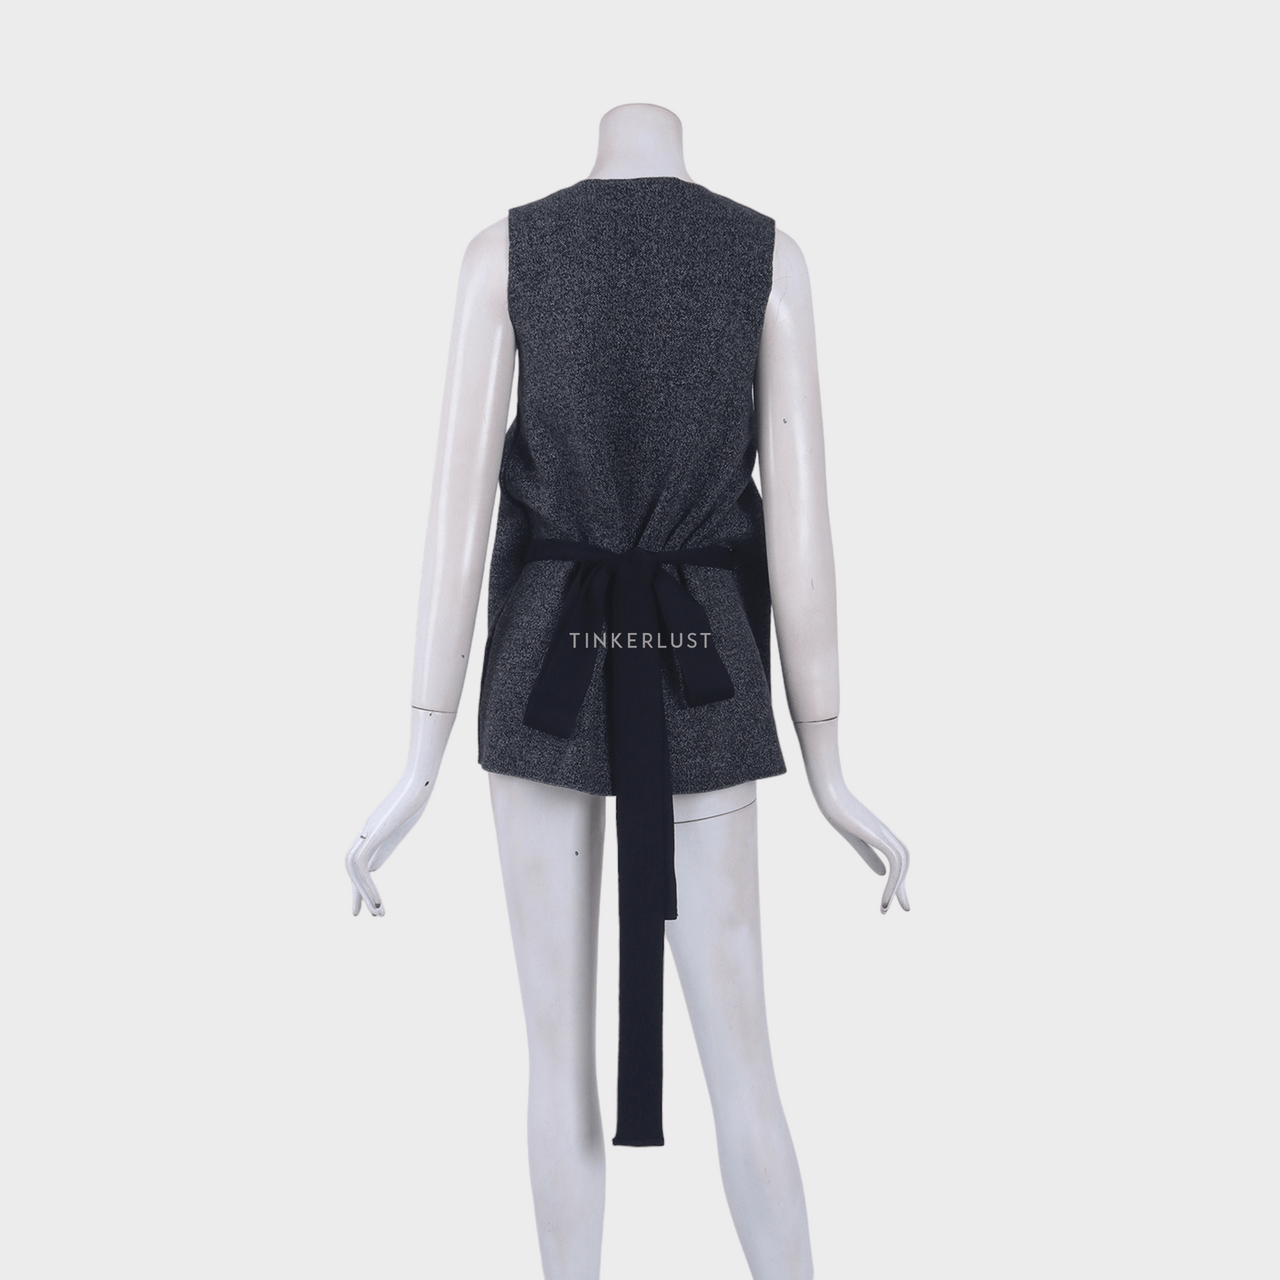 Zara Black & White Knit Sleeveless